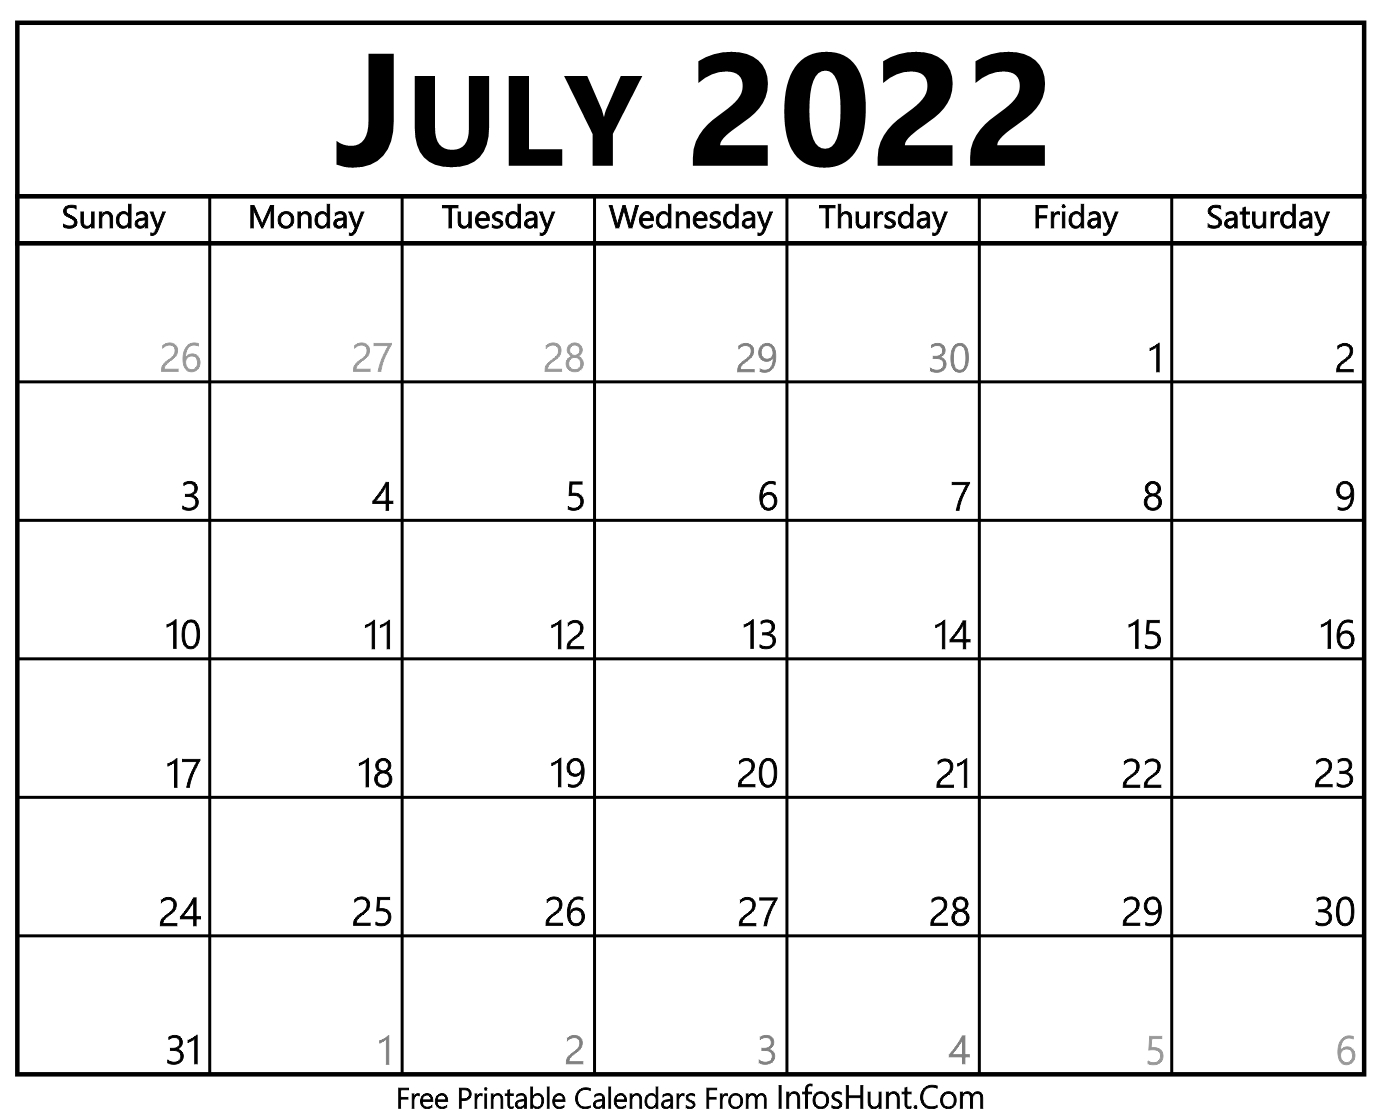 Collect Free Printable Calendar 2022 July